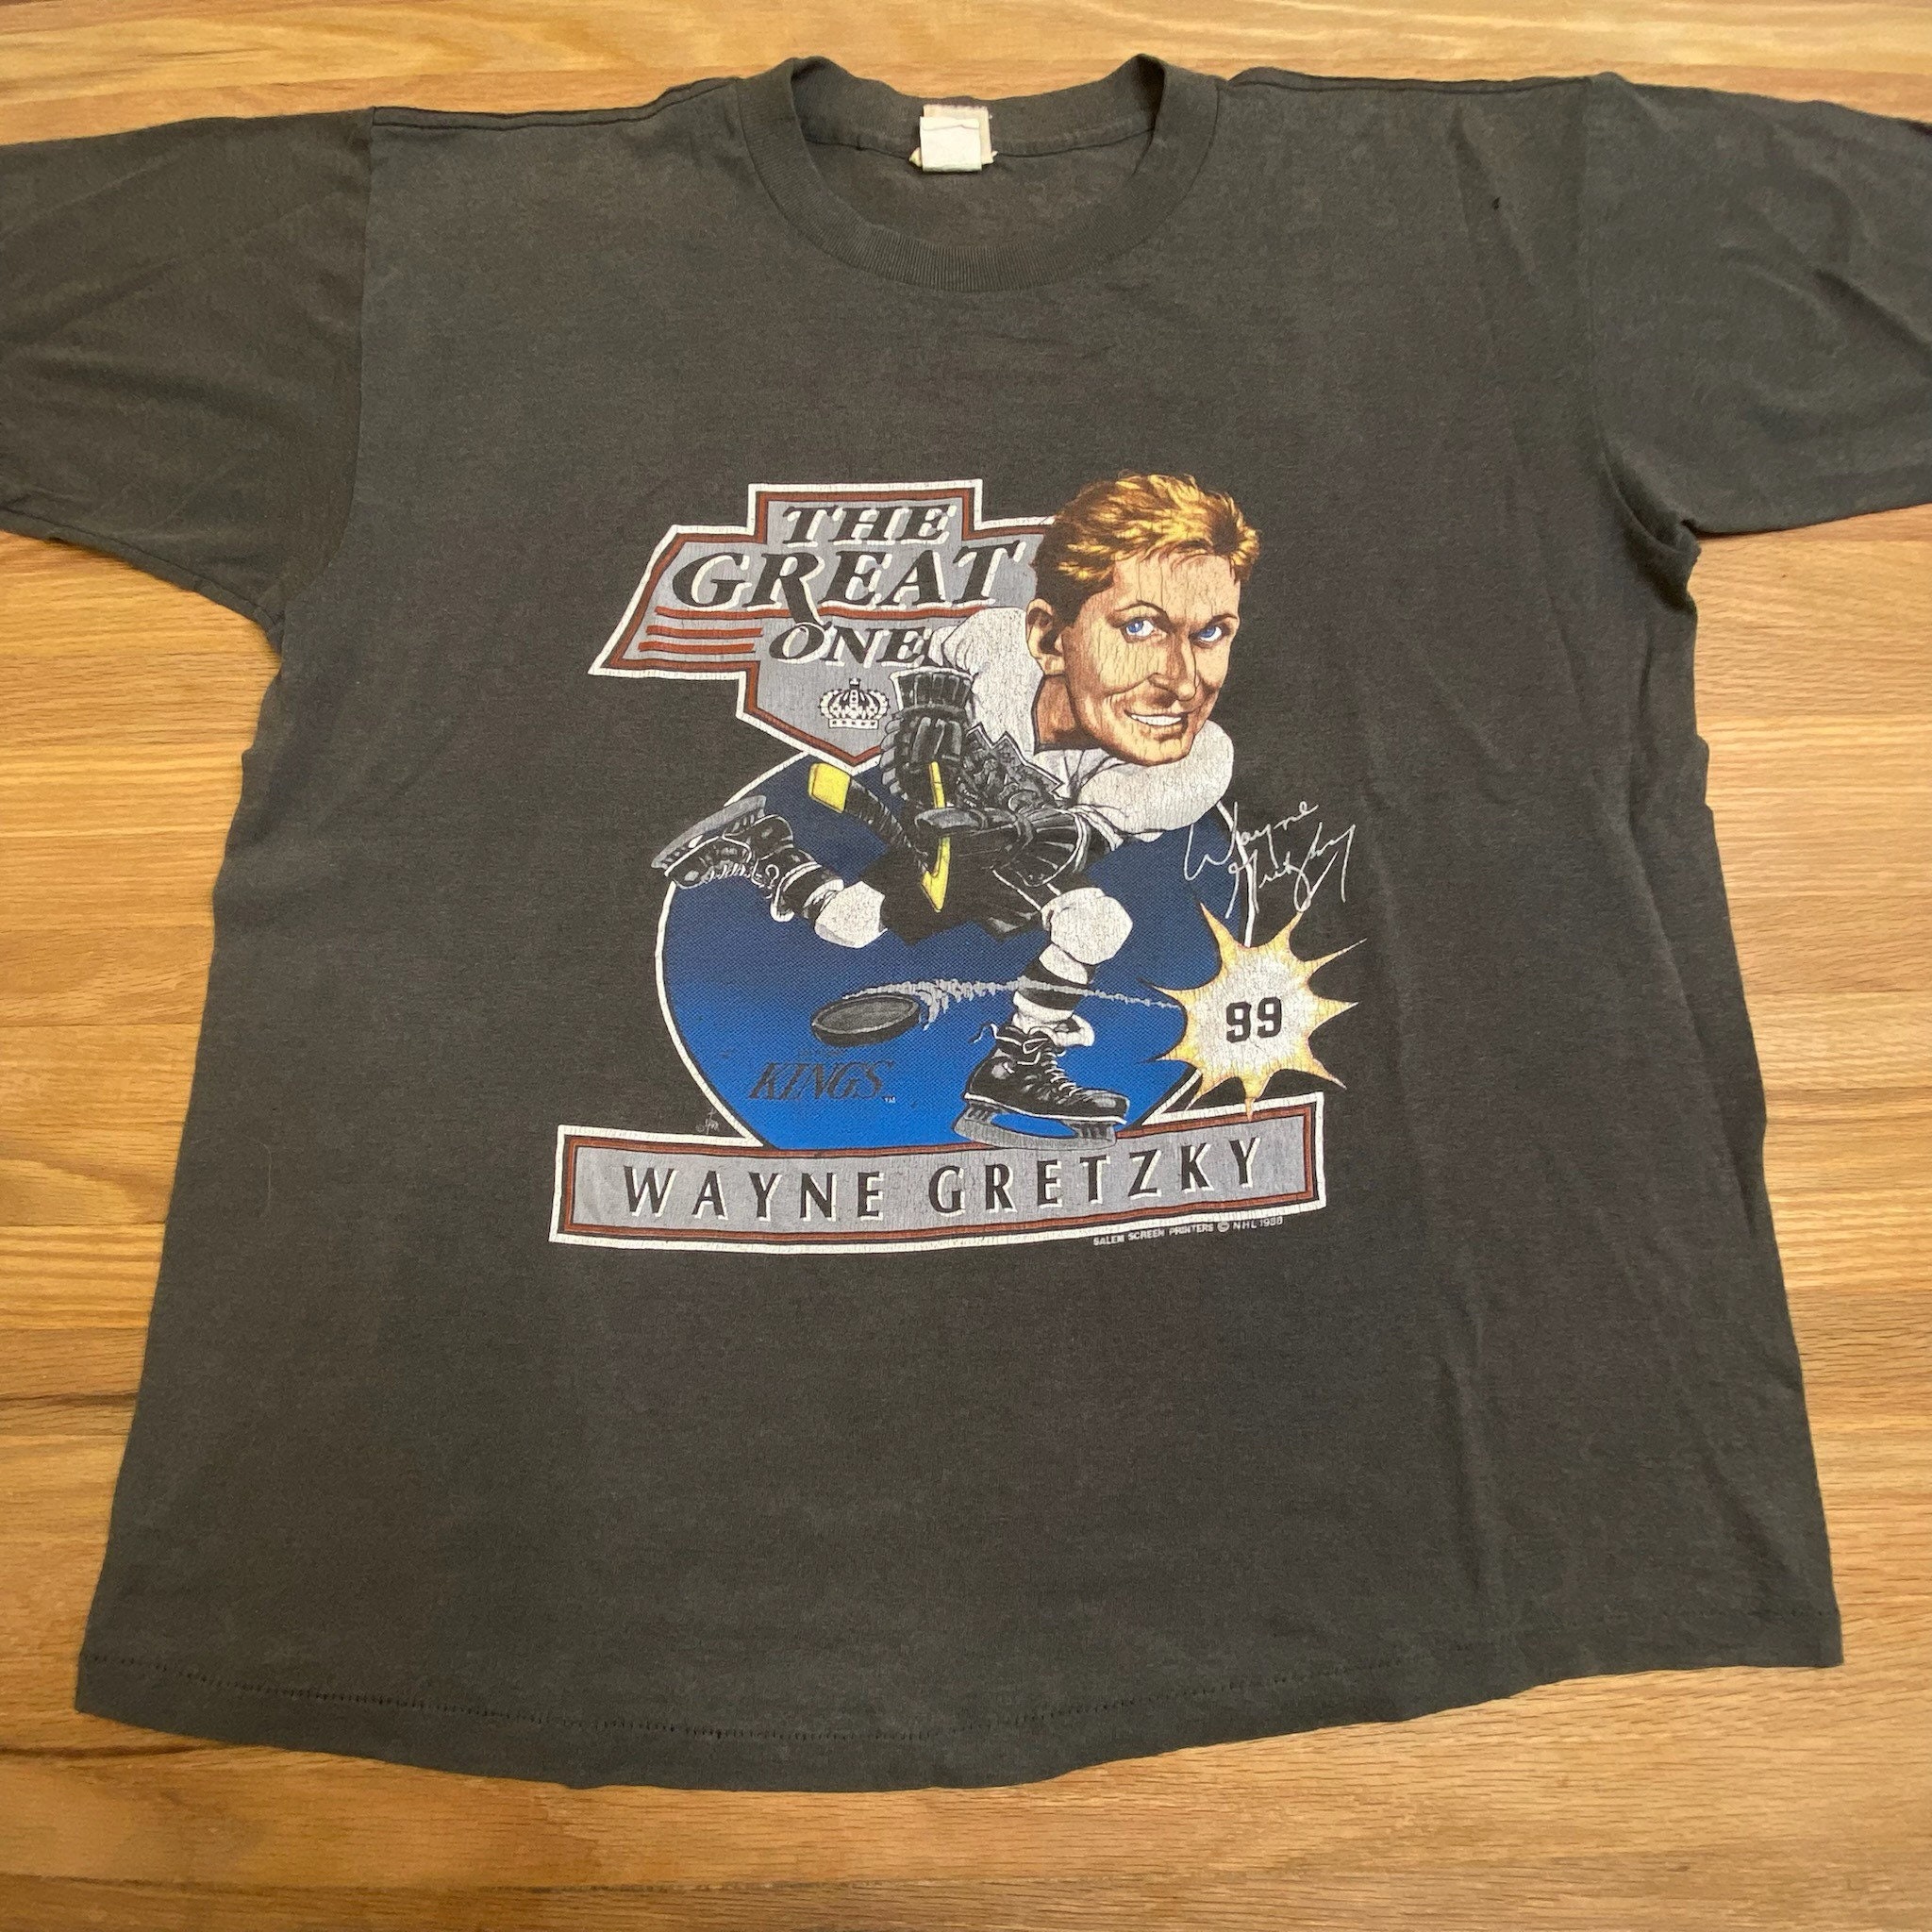 Vtg 90s Wayne Gretzky St Louis Blues T Shirt Mens L Great One NHL